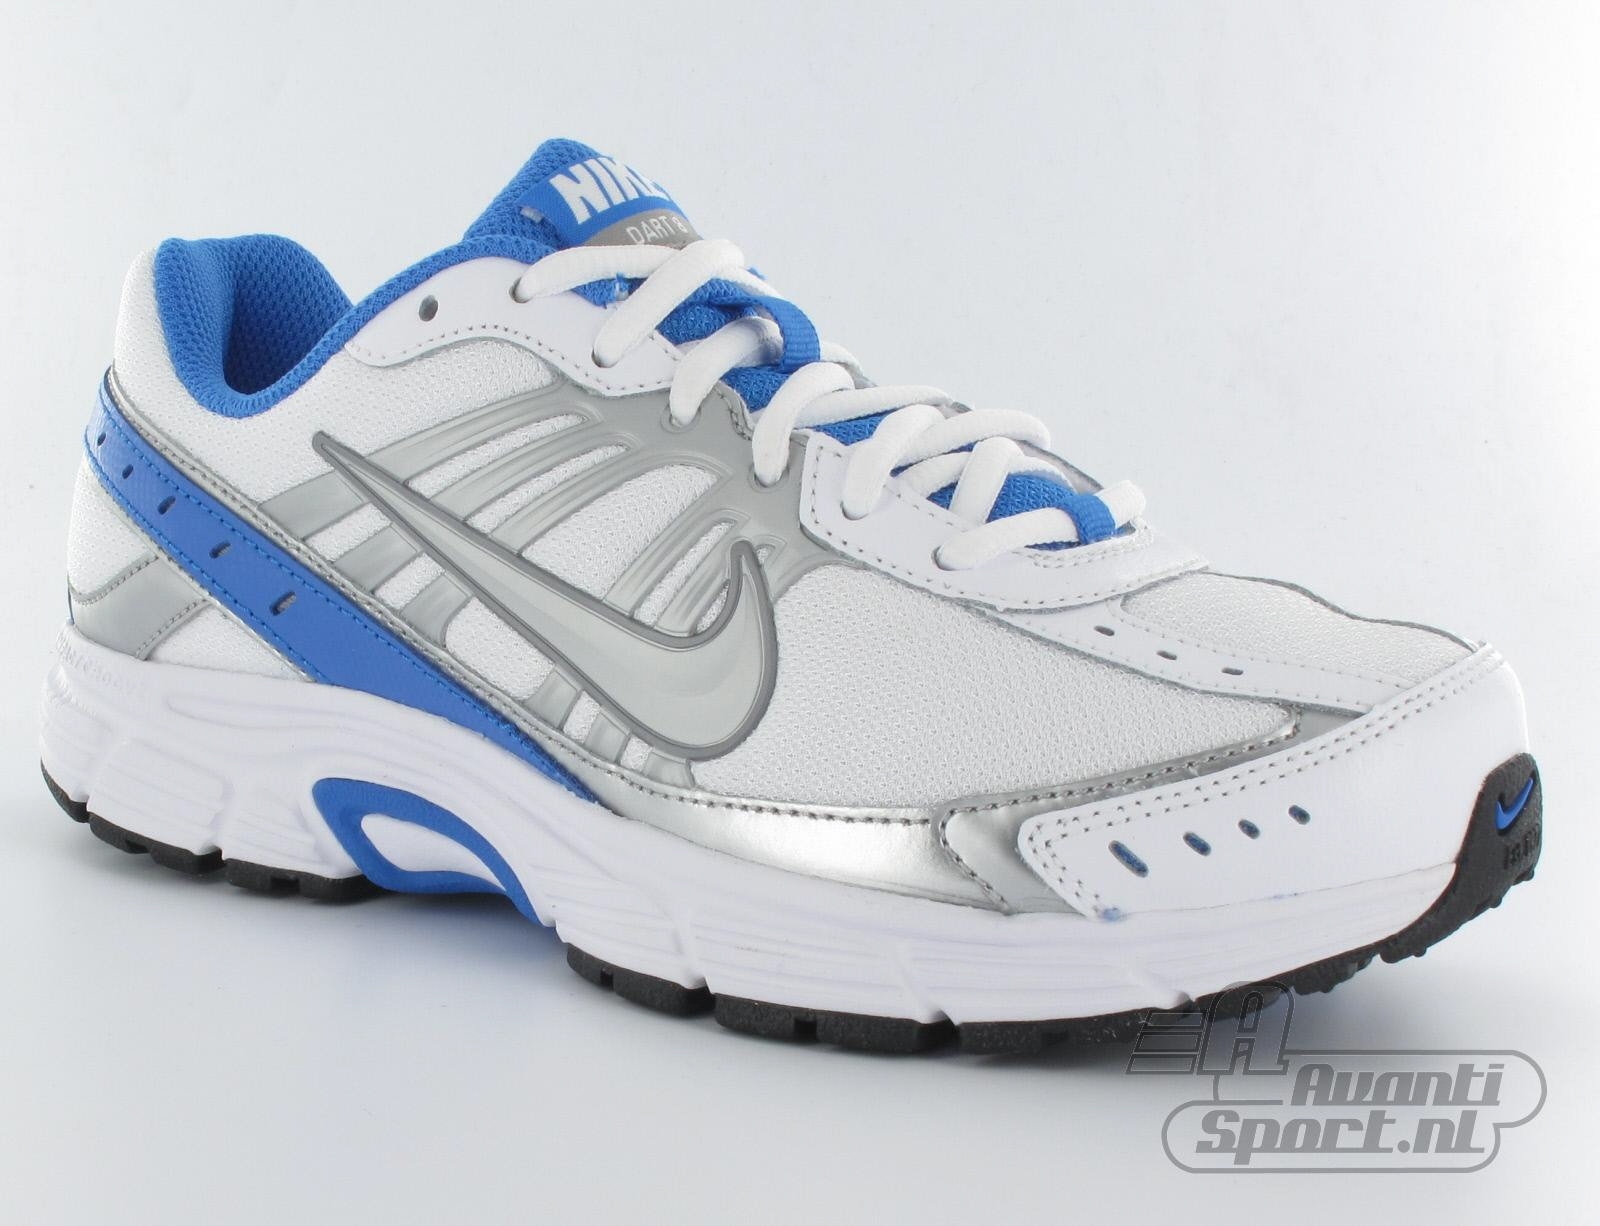 Avantisport - Nike - Women's Dart 8 - White/metallic Silver/blue